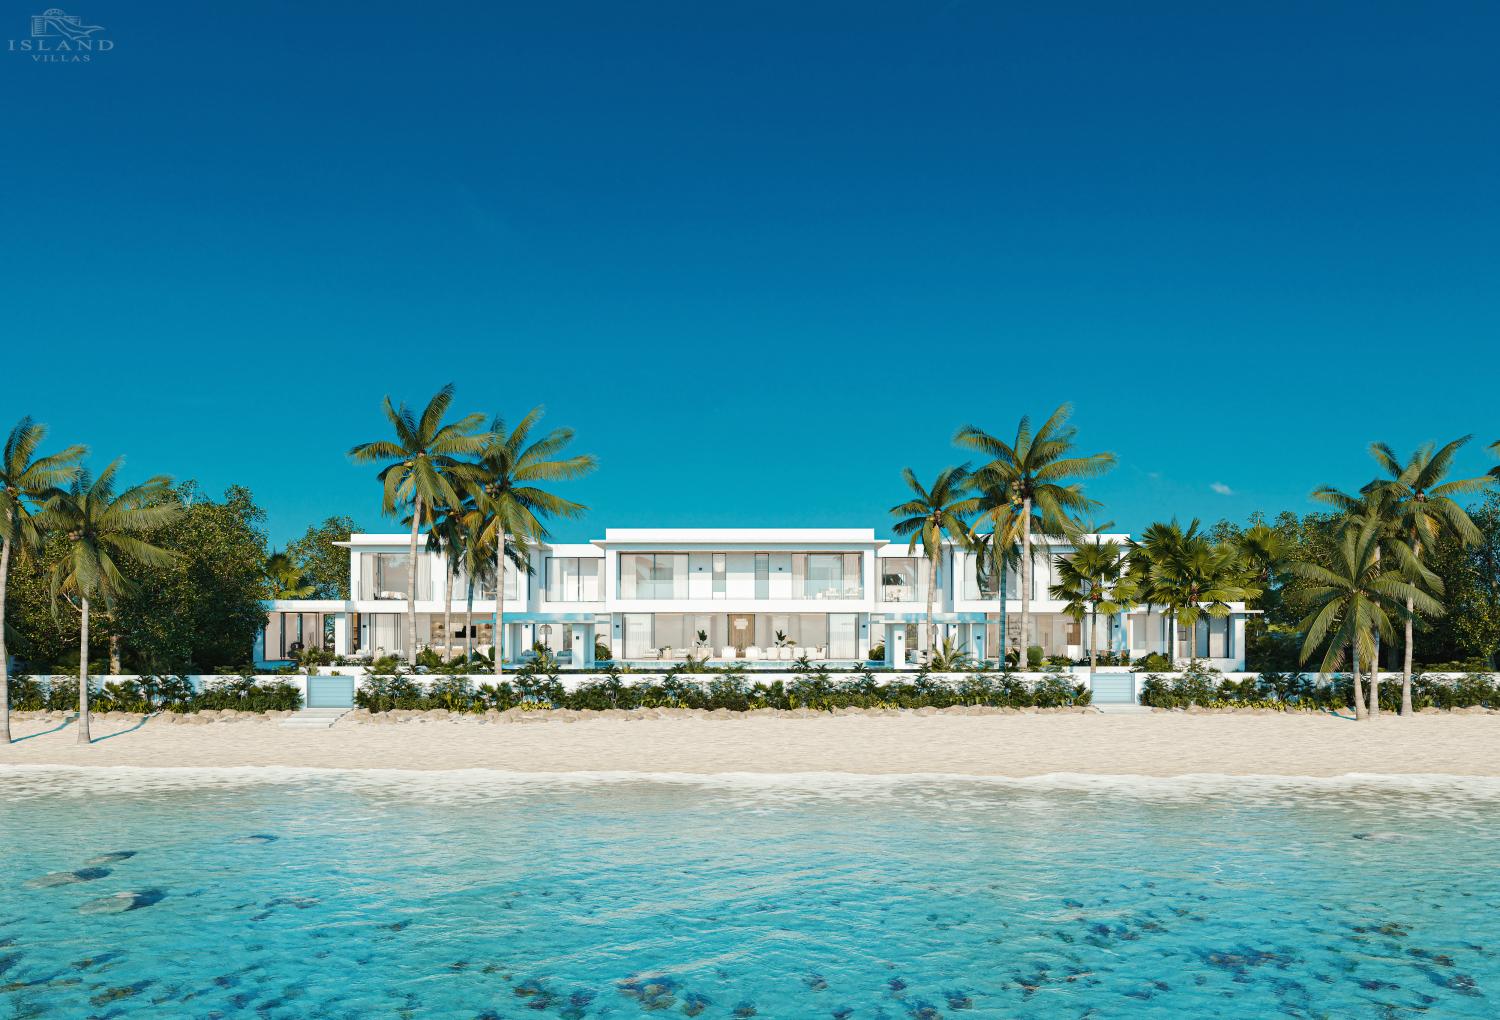 Barbados luxury travel guide; Barbados property for sale 